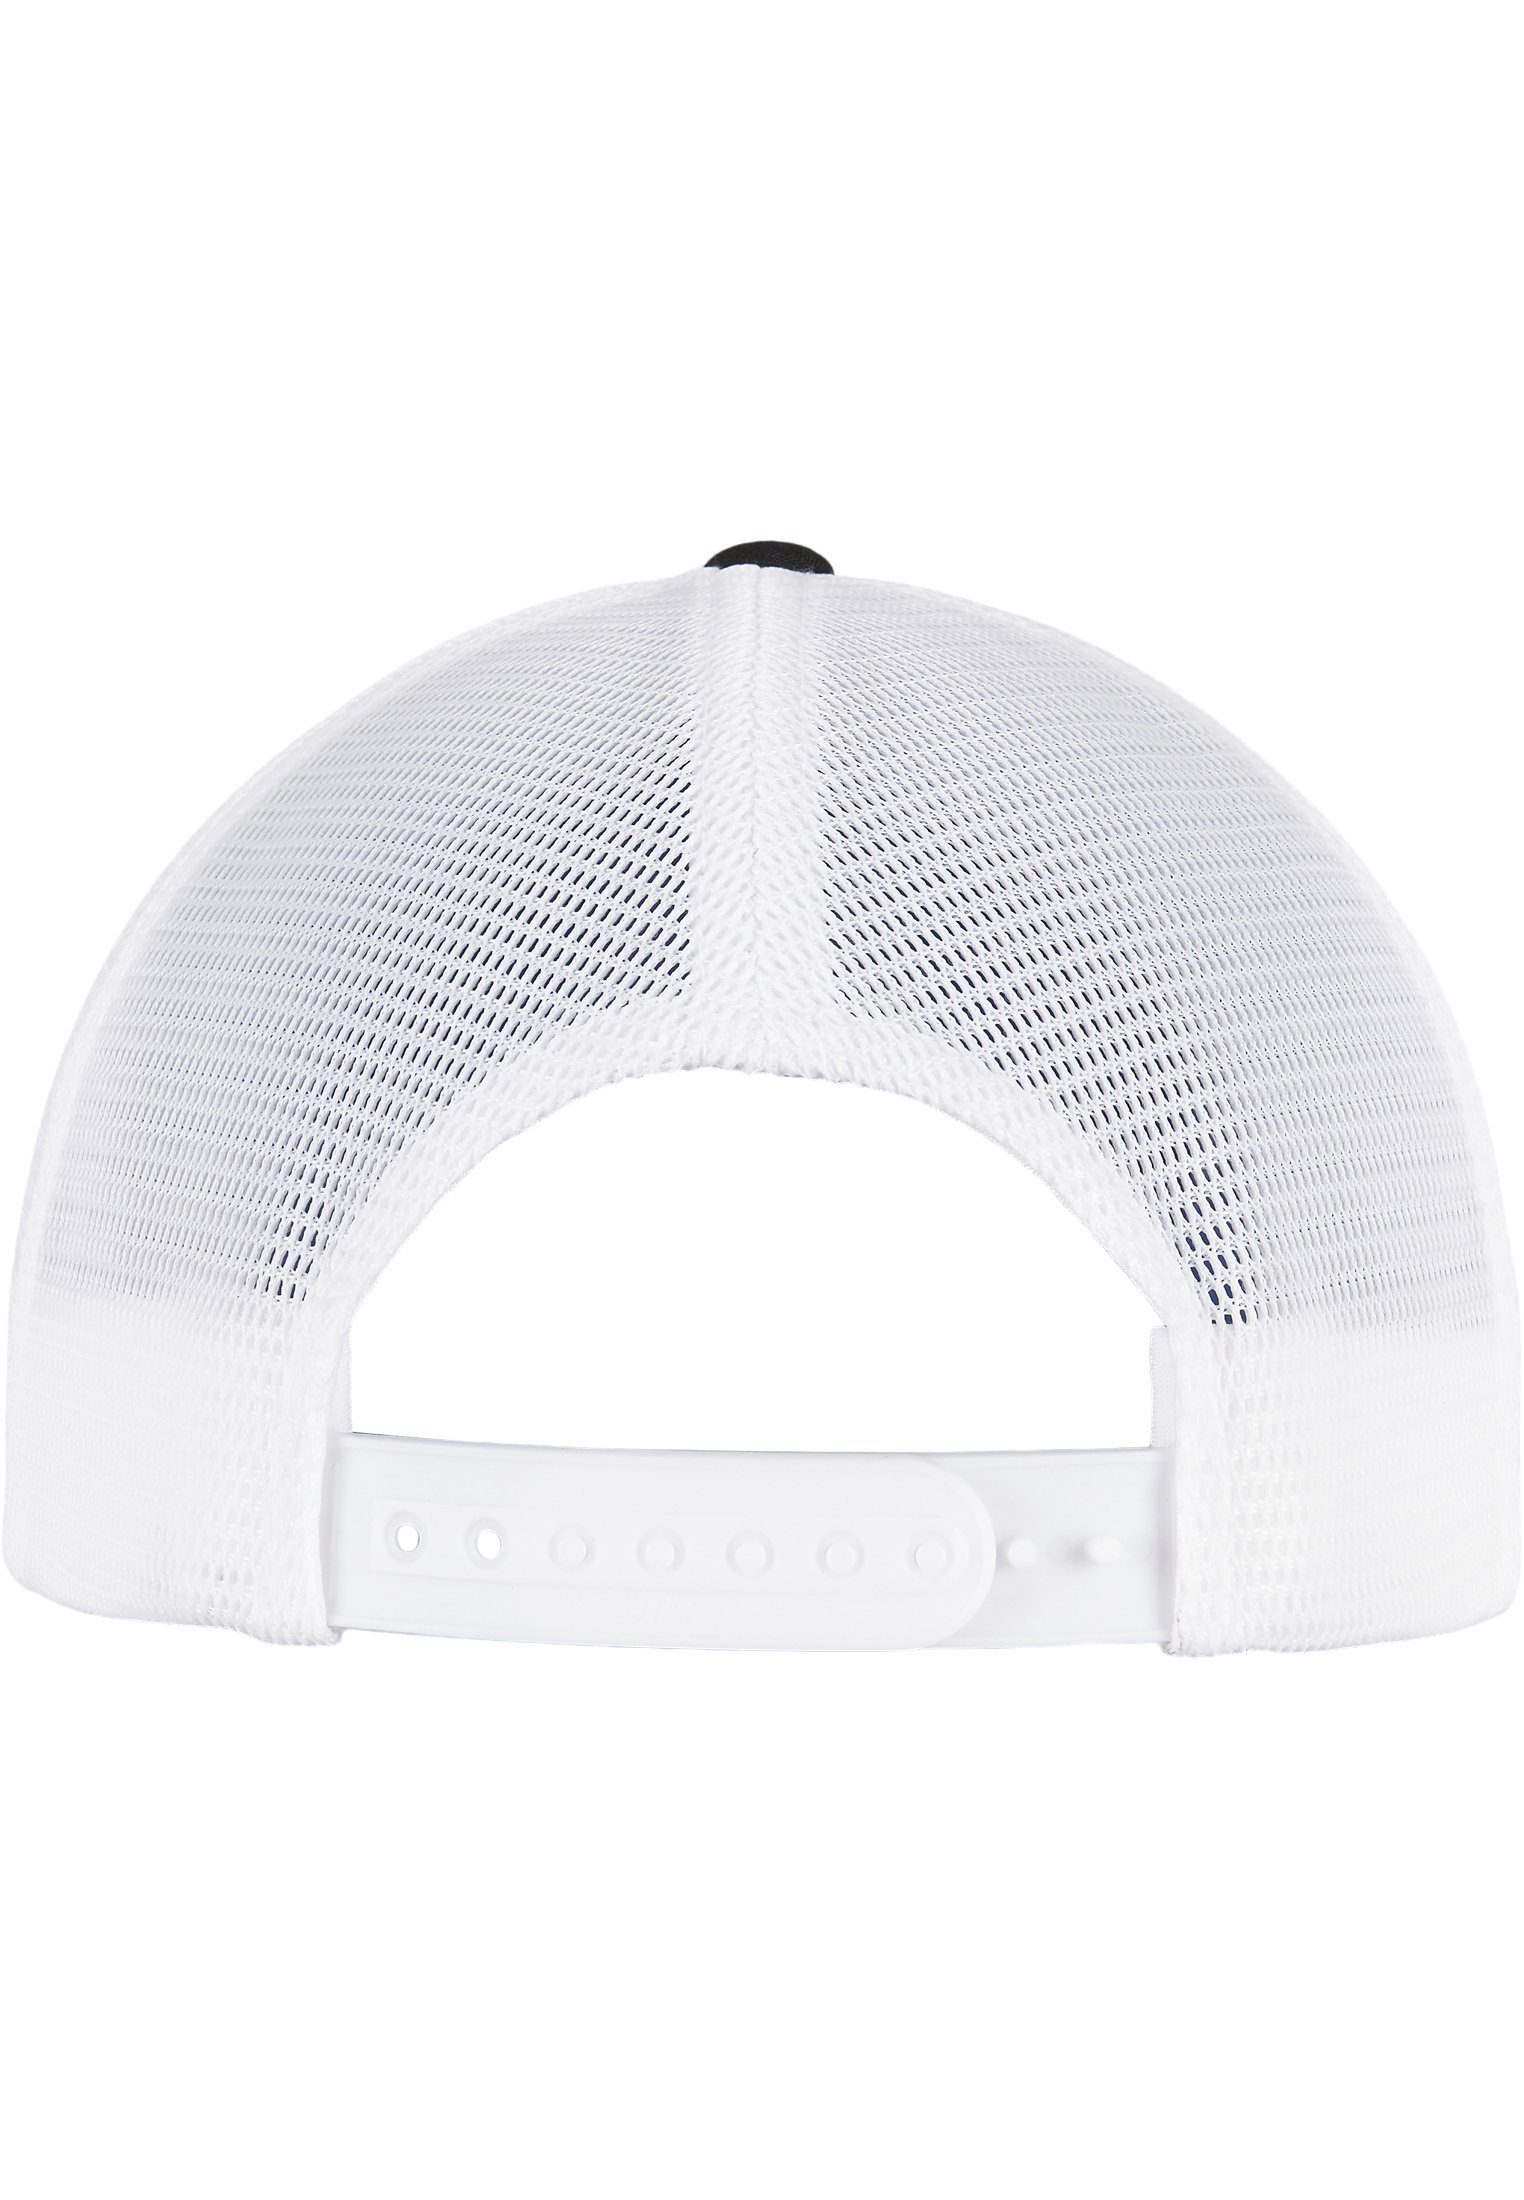 Omnimesh 360° Flex Accessoires 2-Tone black/white Cap Flexfit Cap